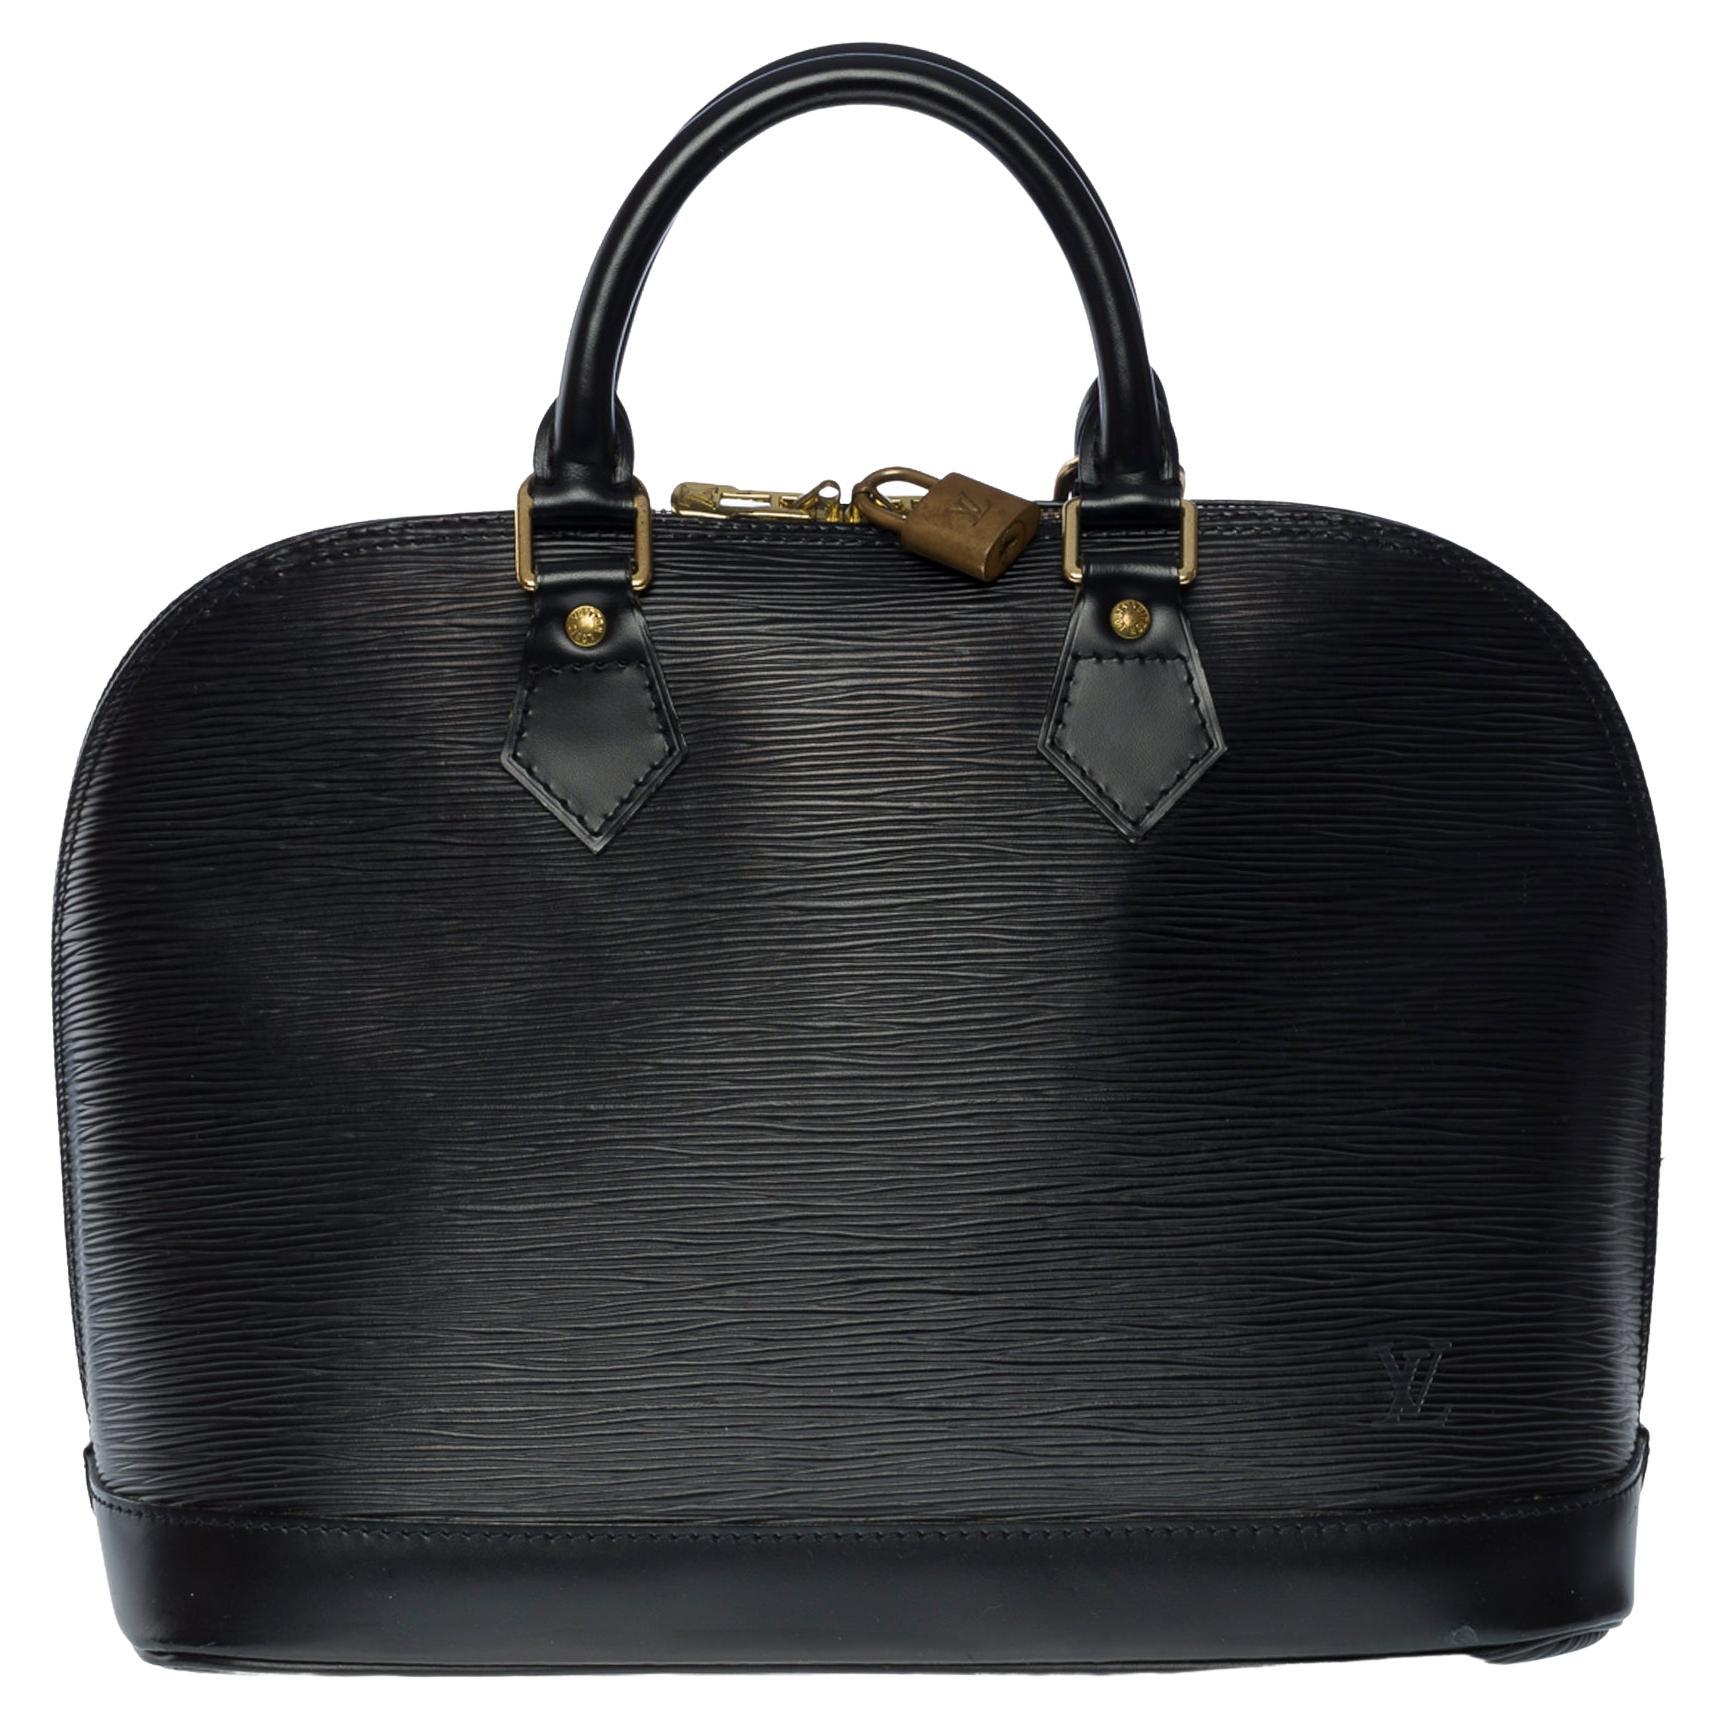 Louis Vuitton Alma handbag in black épi leather with gold hardware